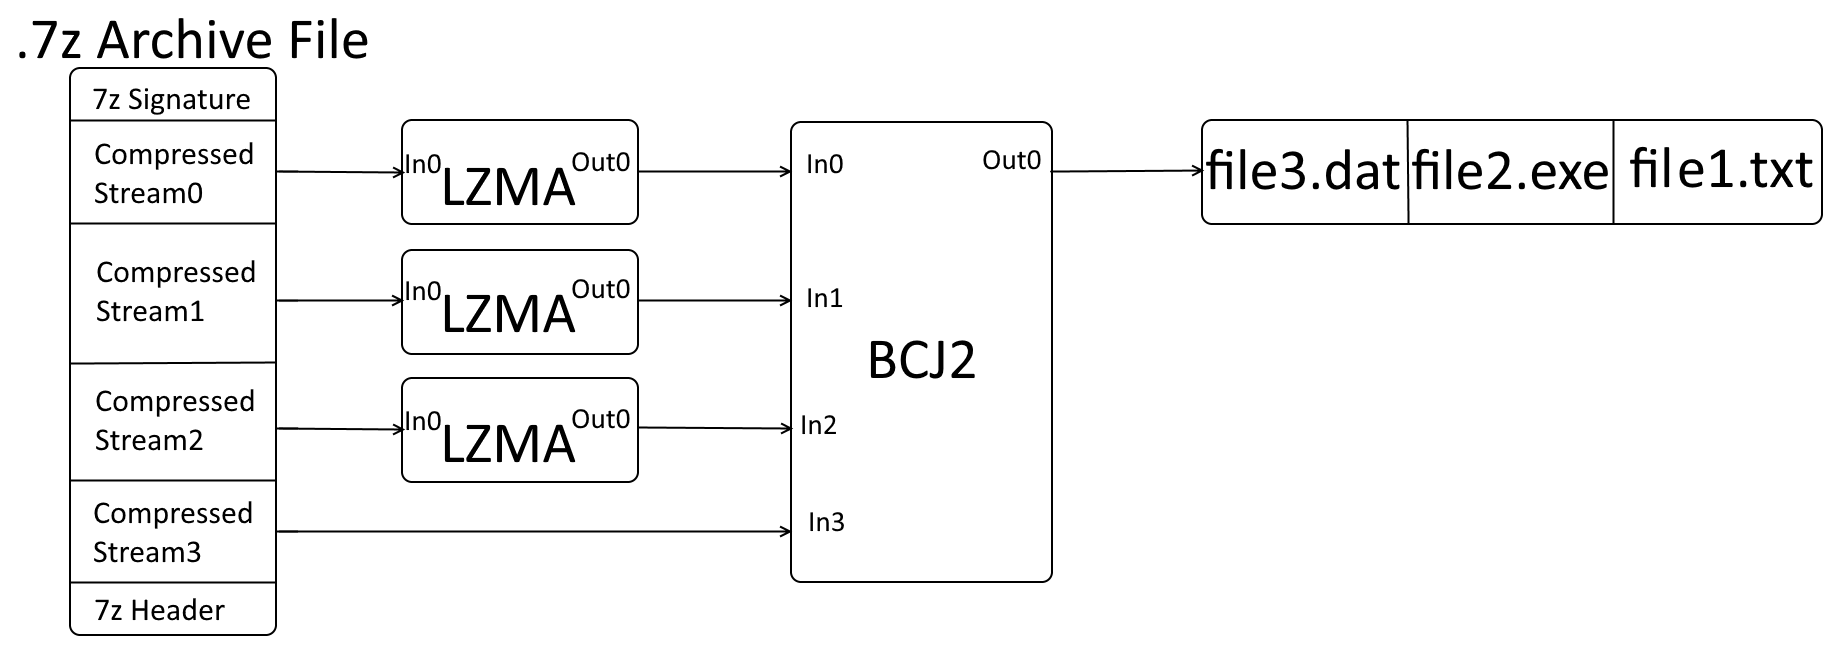 7Zip - Internal Structure